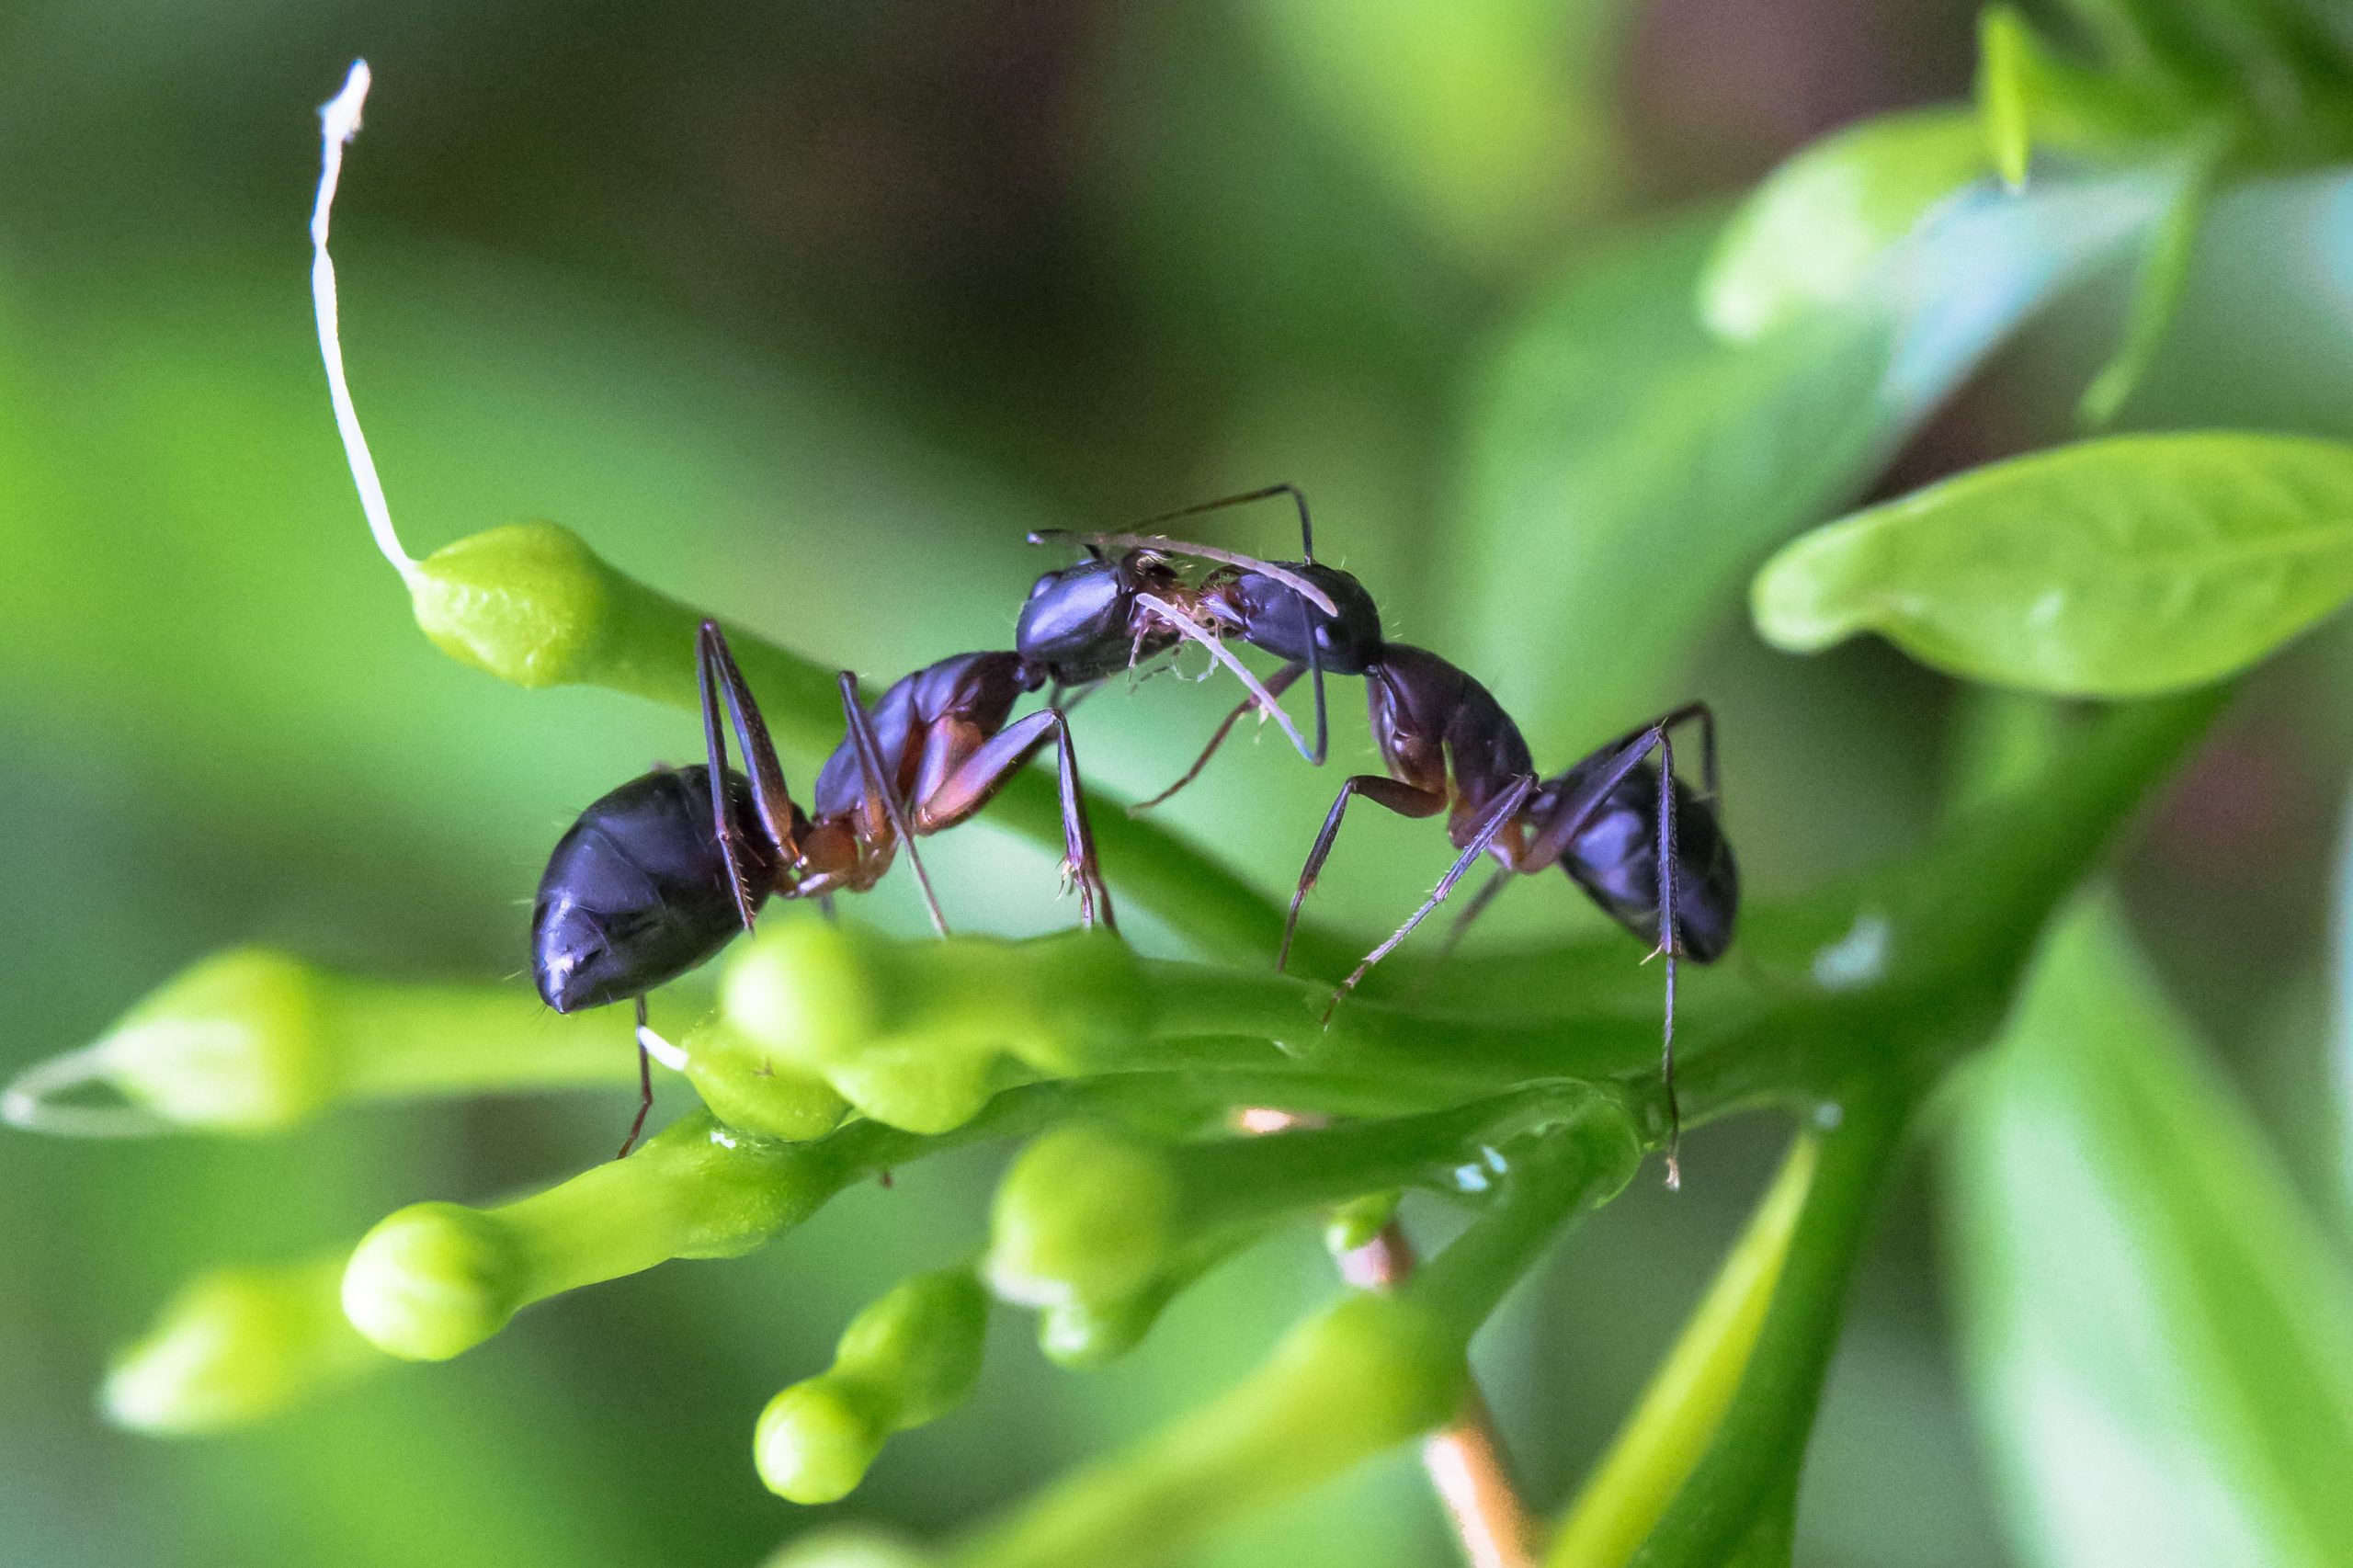 faq - Does Birch Fumigators offer carpenter ant pest control in St Albert